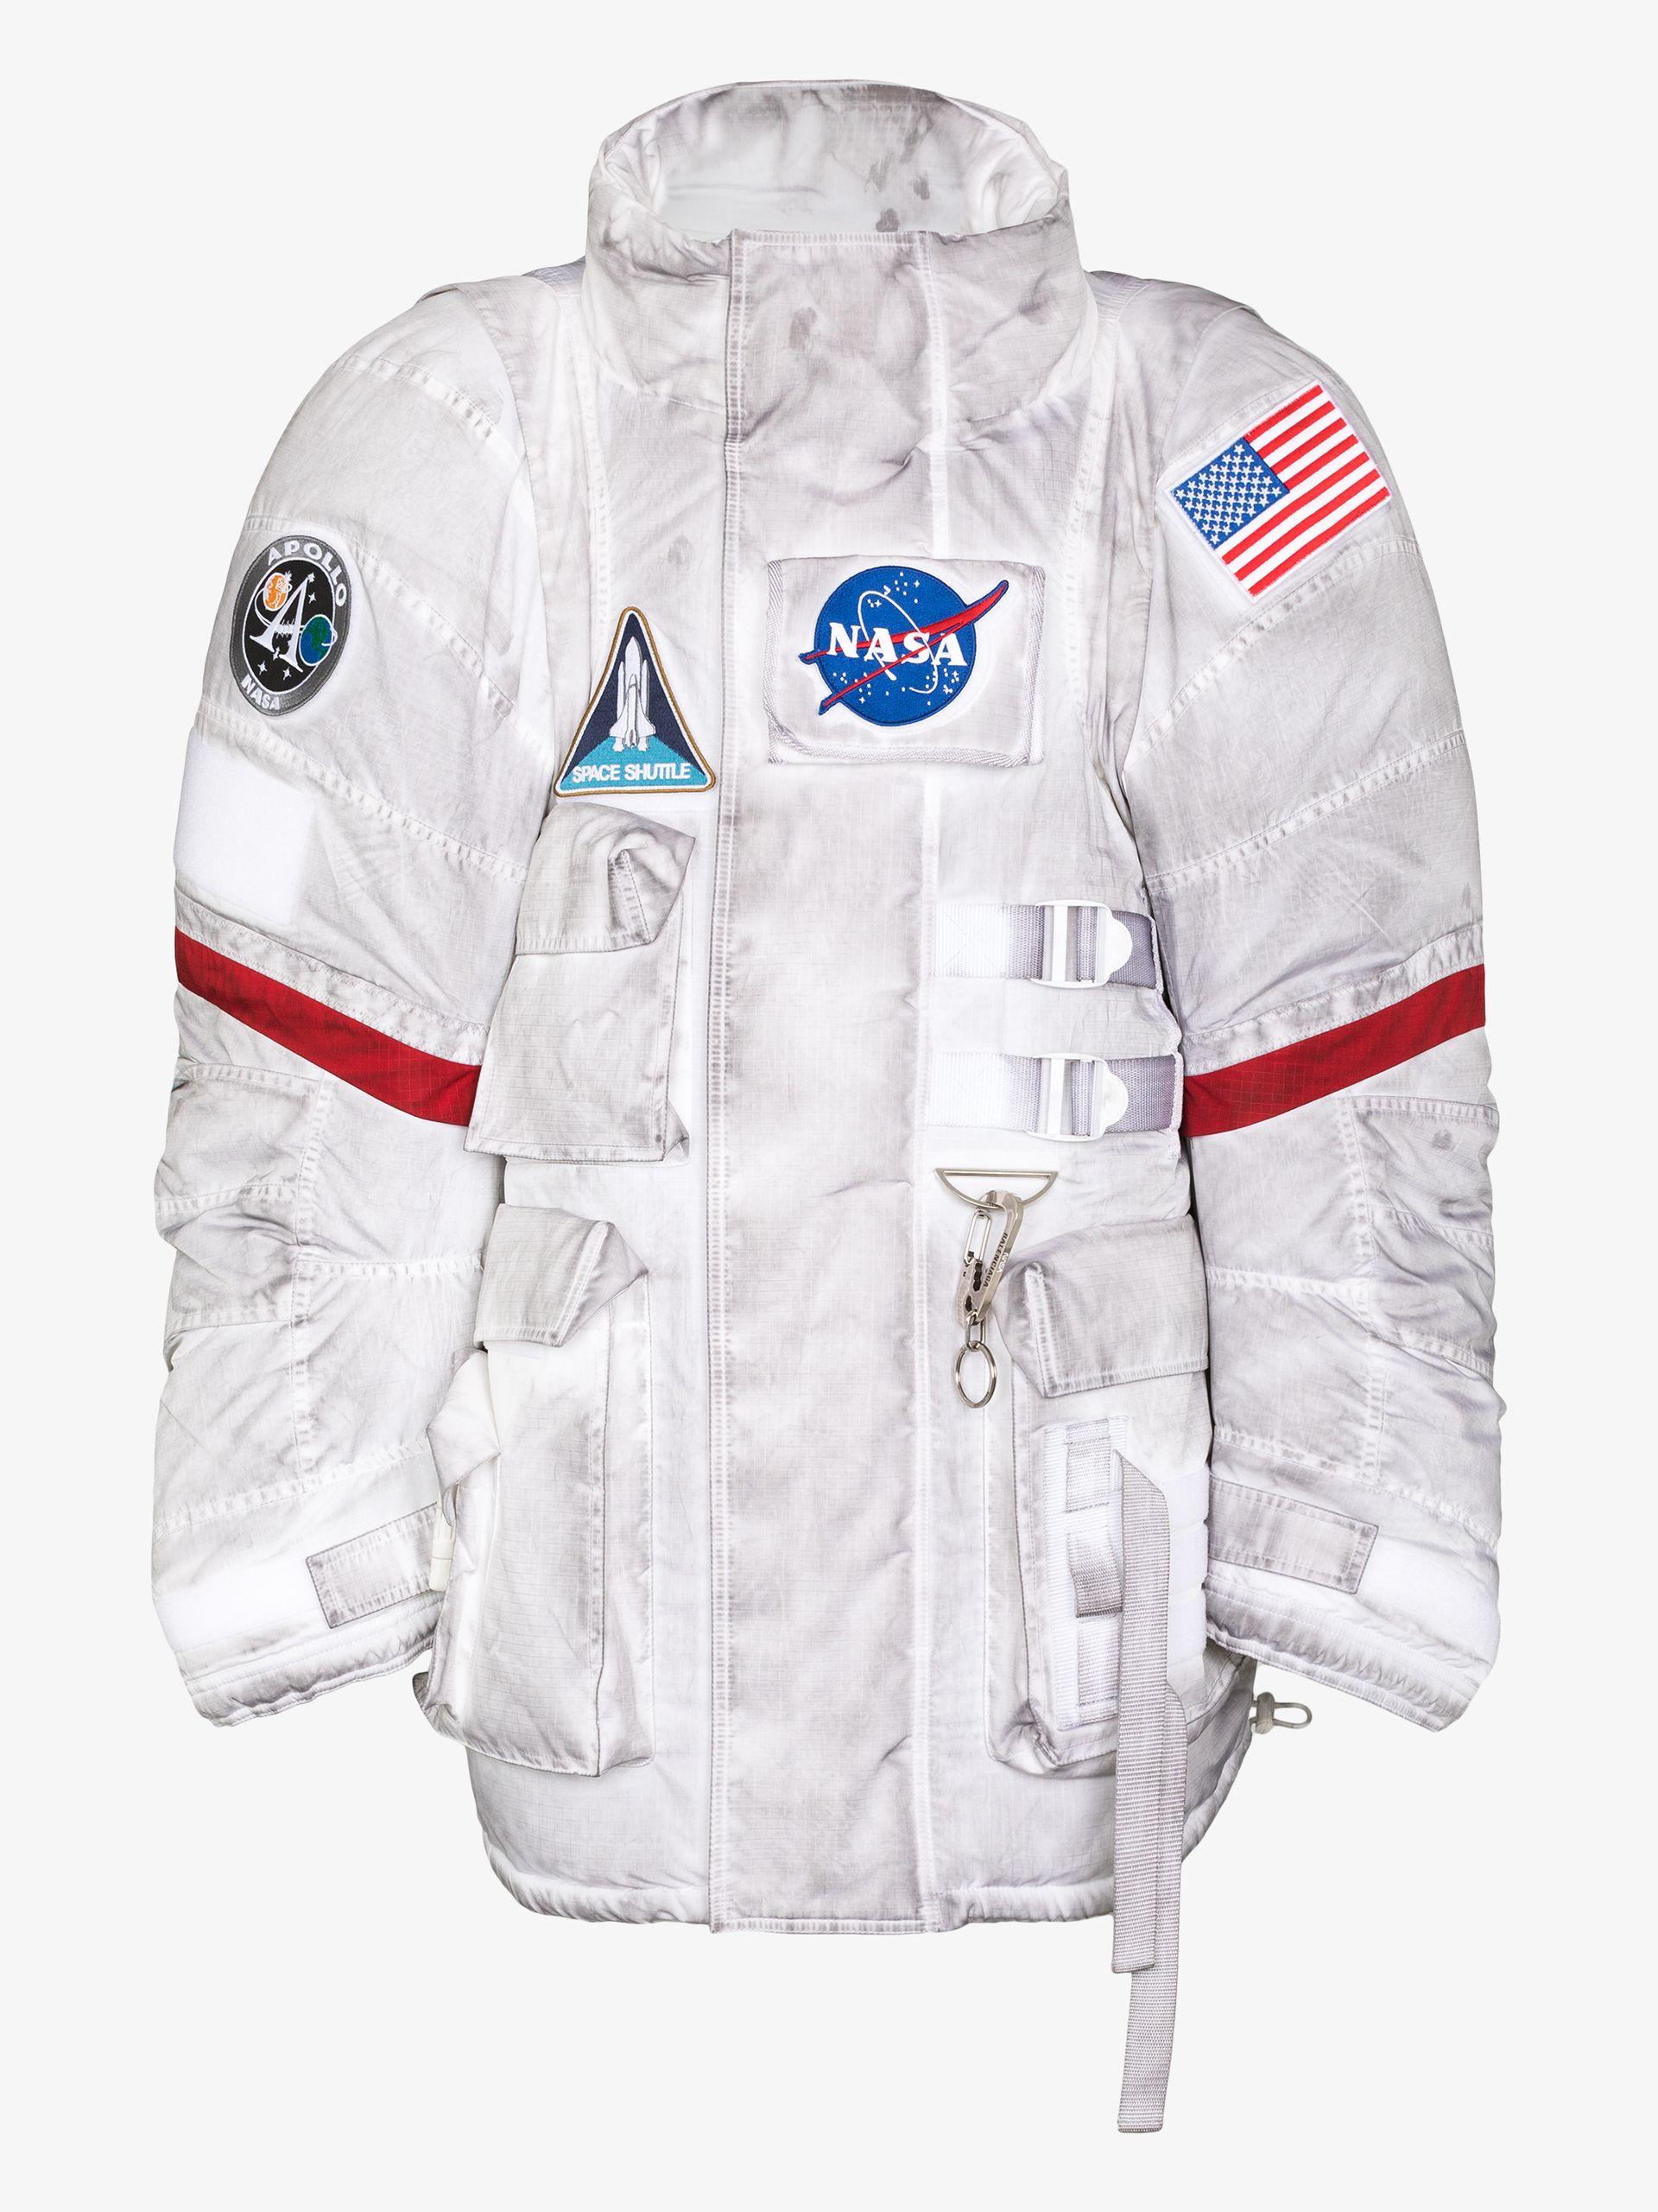 Balenciaga Nasa Space Parka Coat in White for Men | Lyst